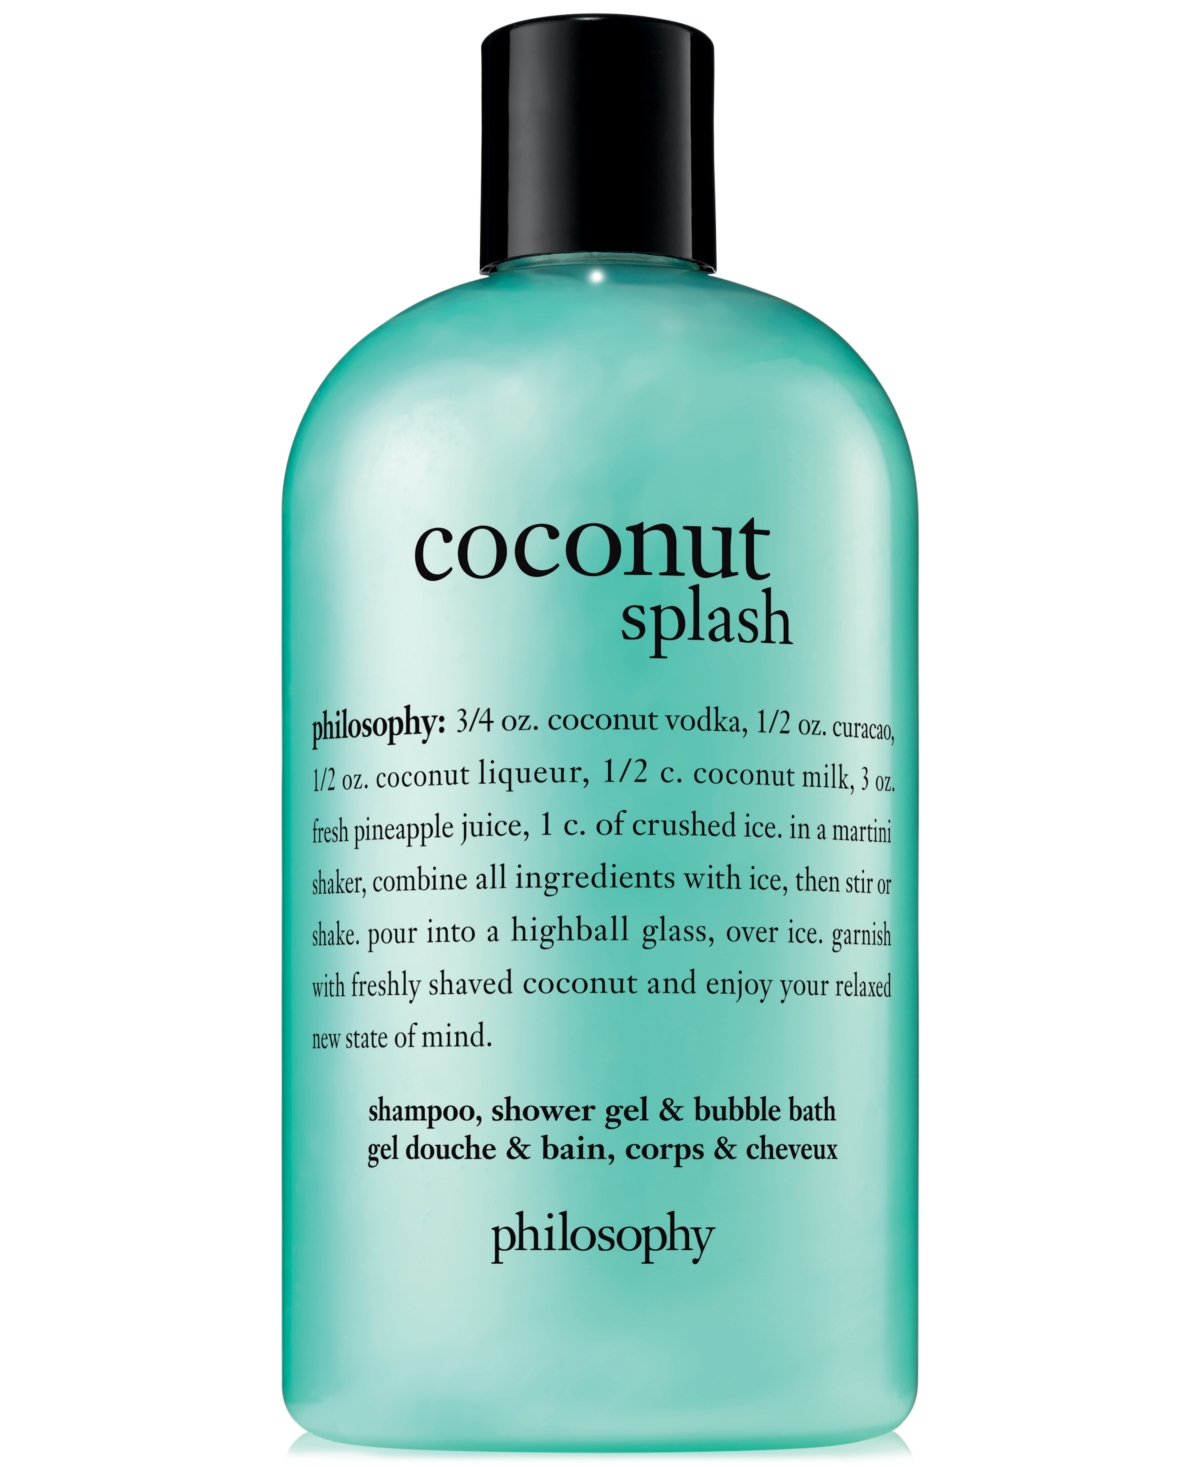 coconut splash 3-in-1 shampoo, shower gel and bubble bath, 16-oz.